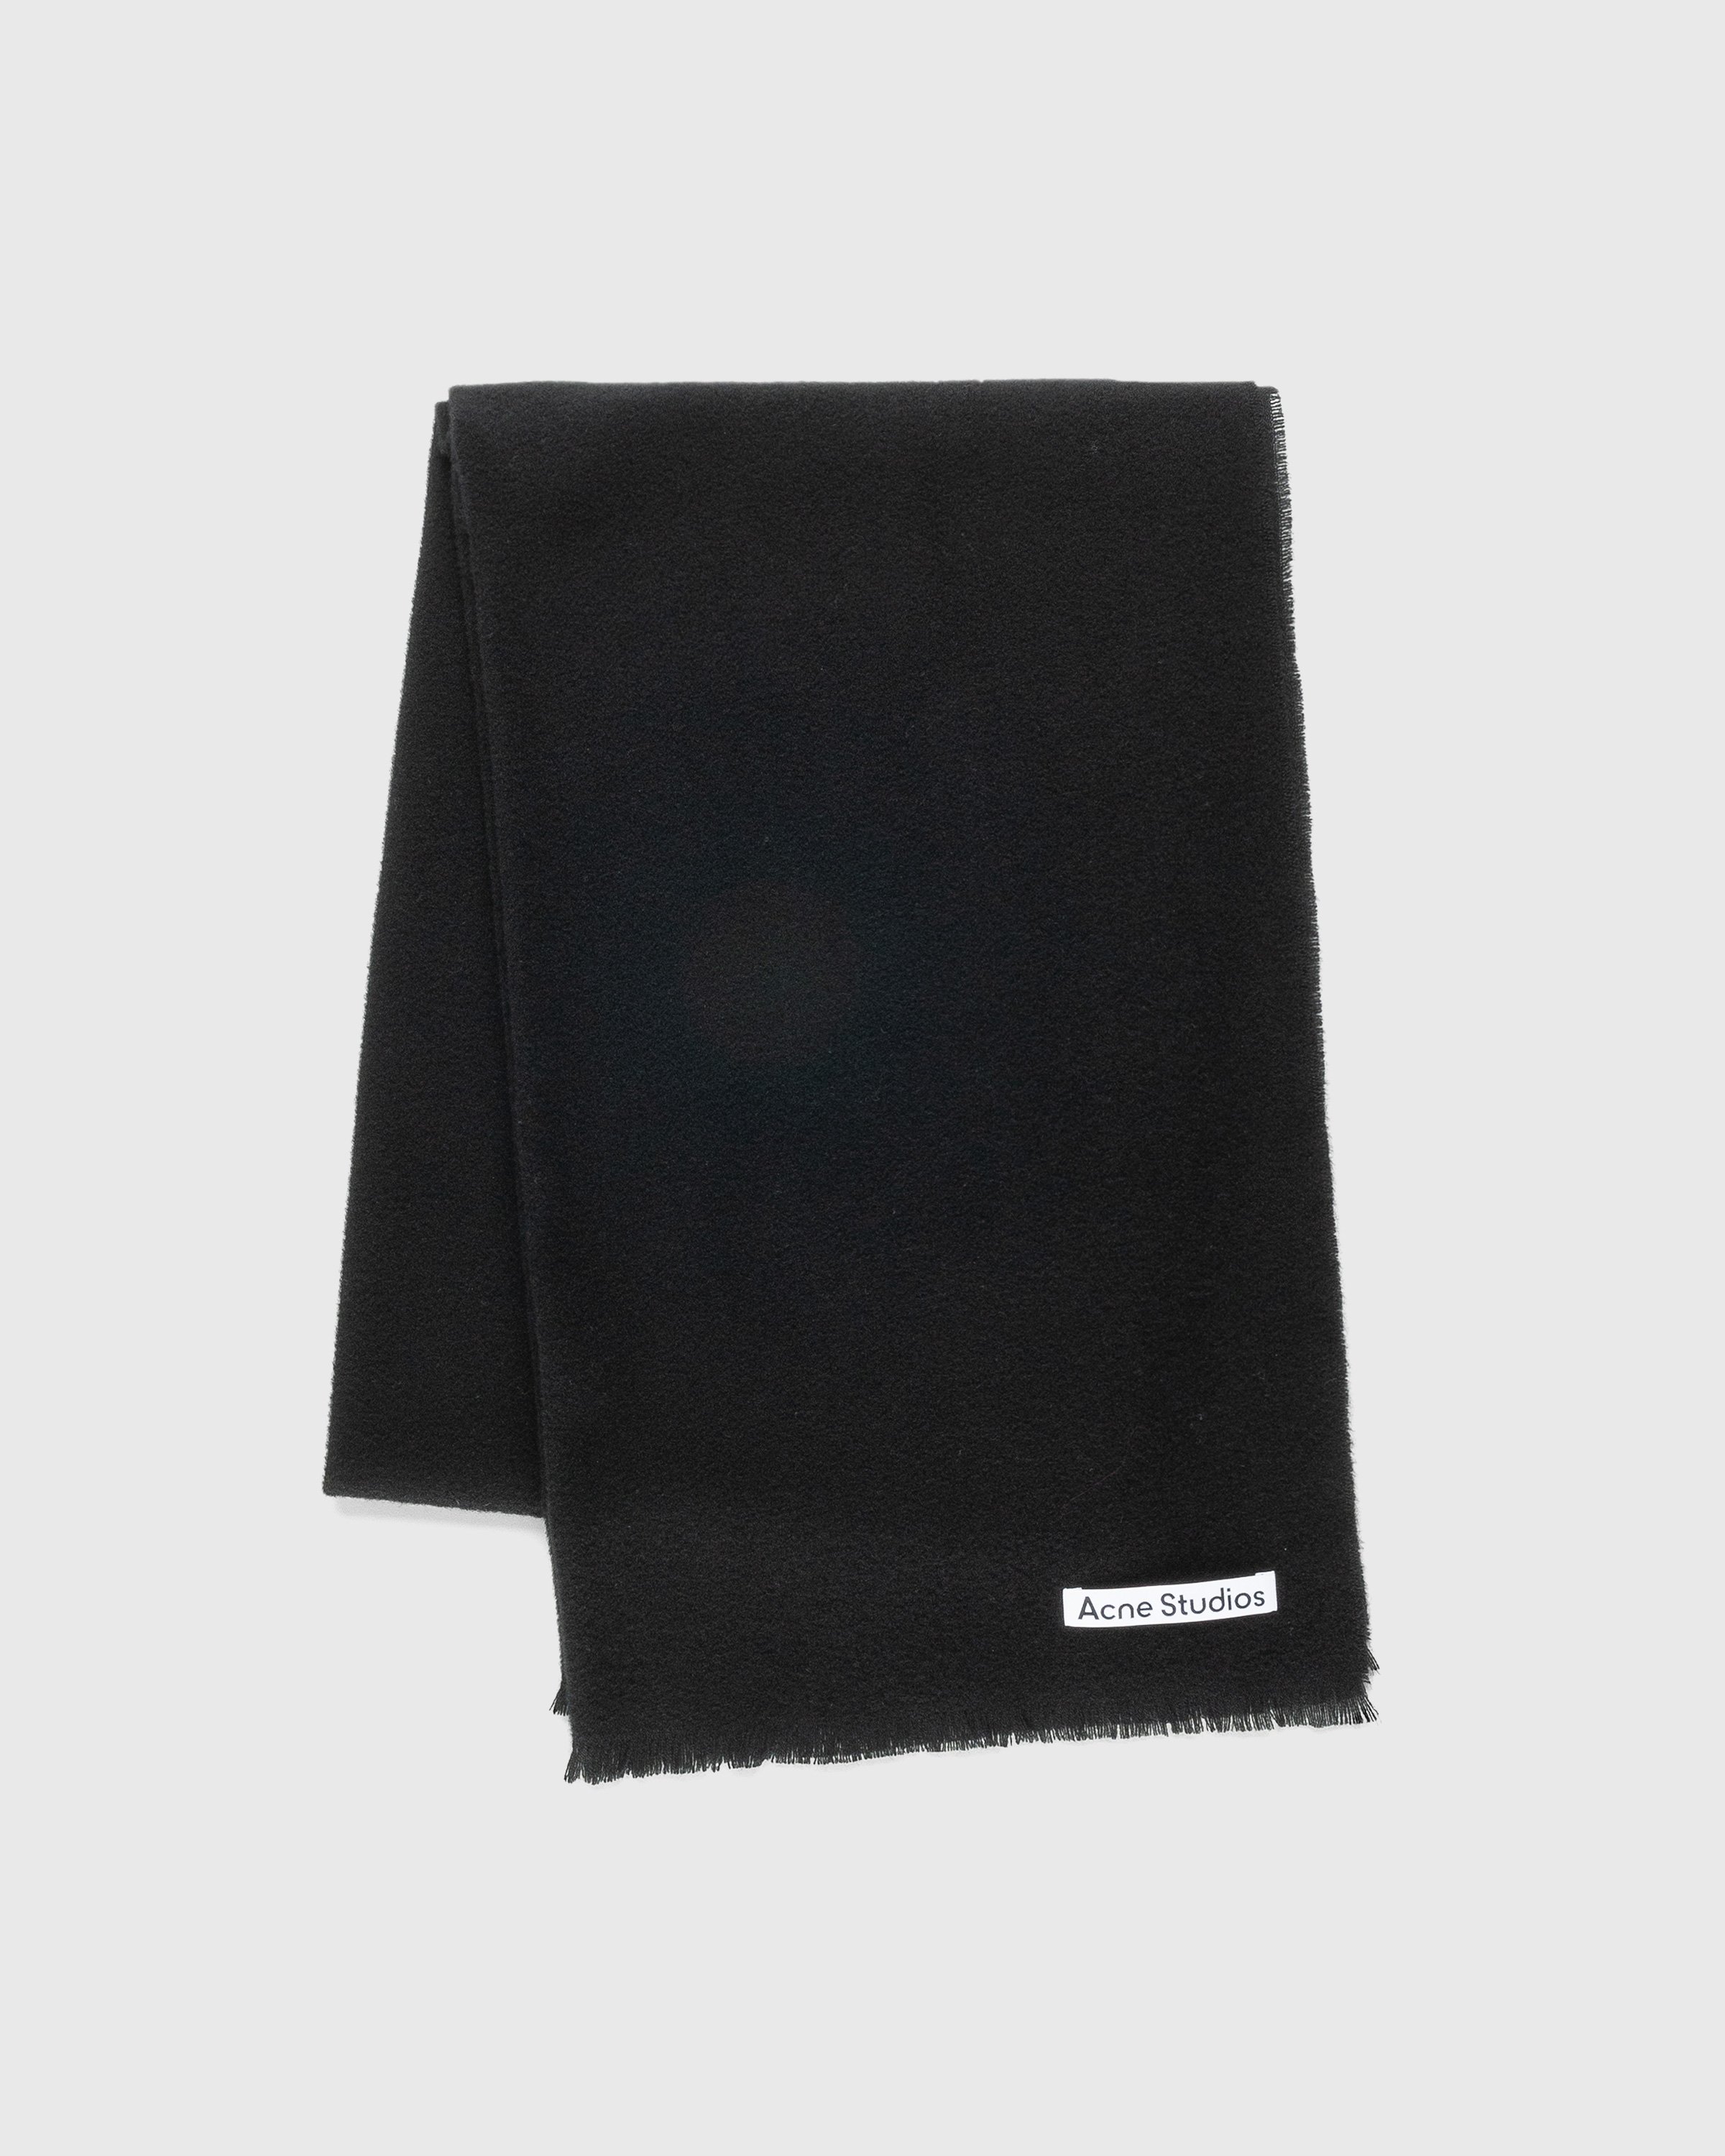 Acne Studios - Oversized Wool Scarf Black - Accessories - Black - Image 2